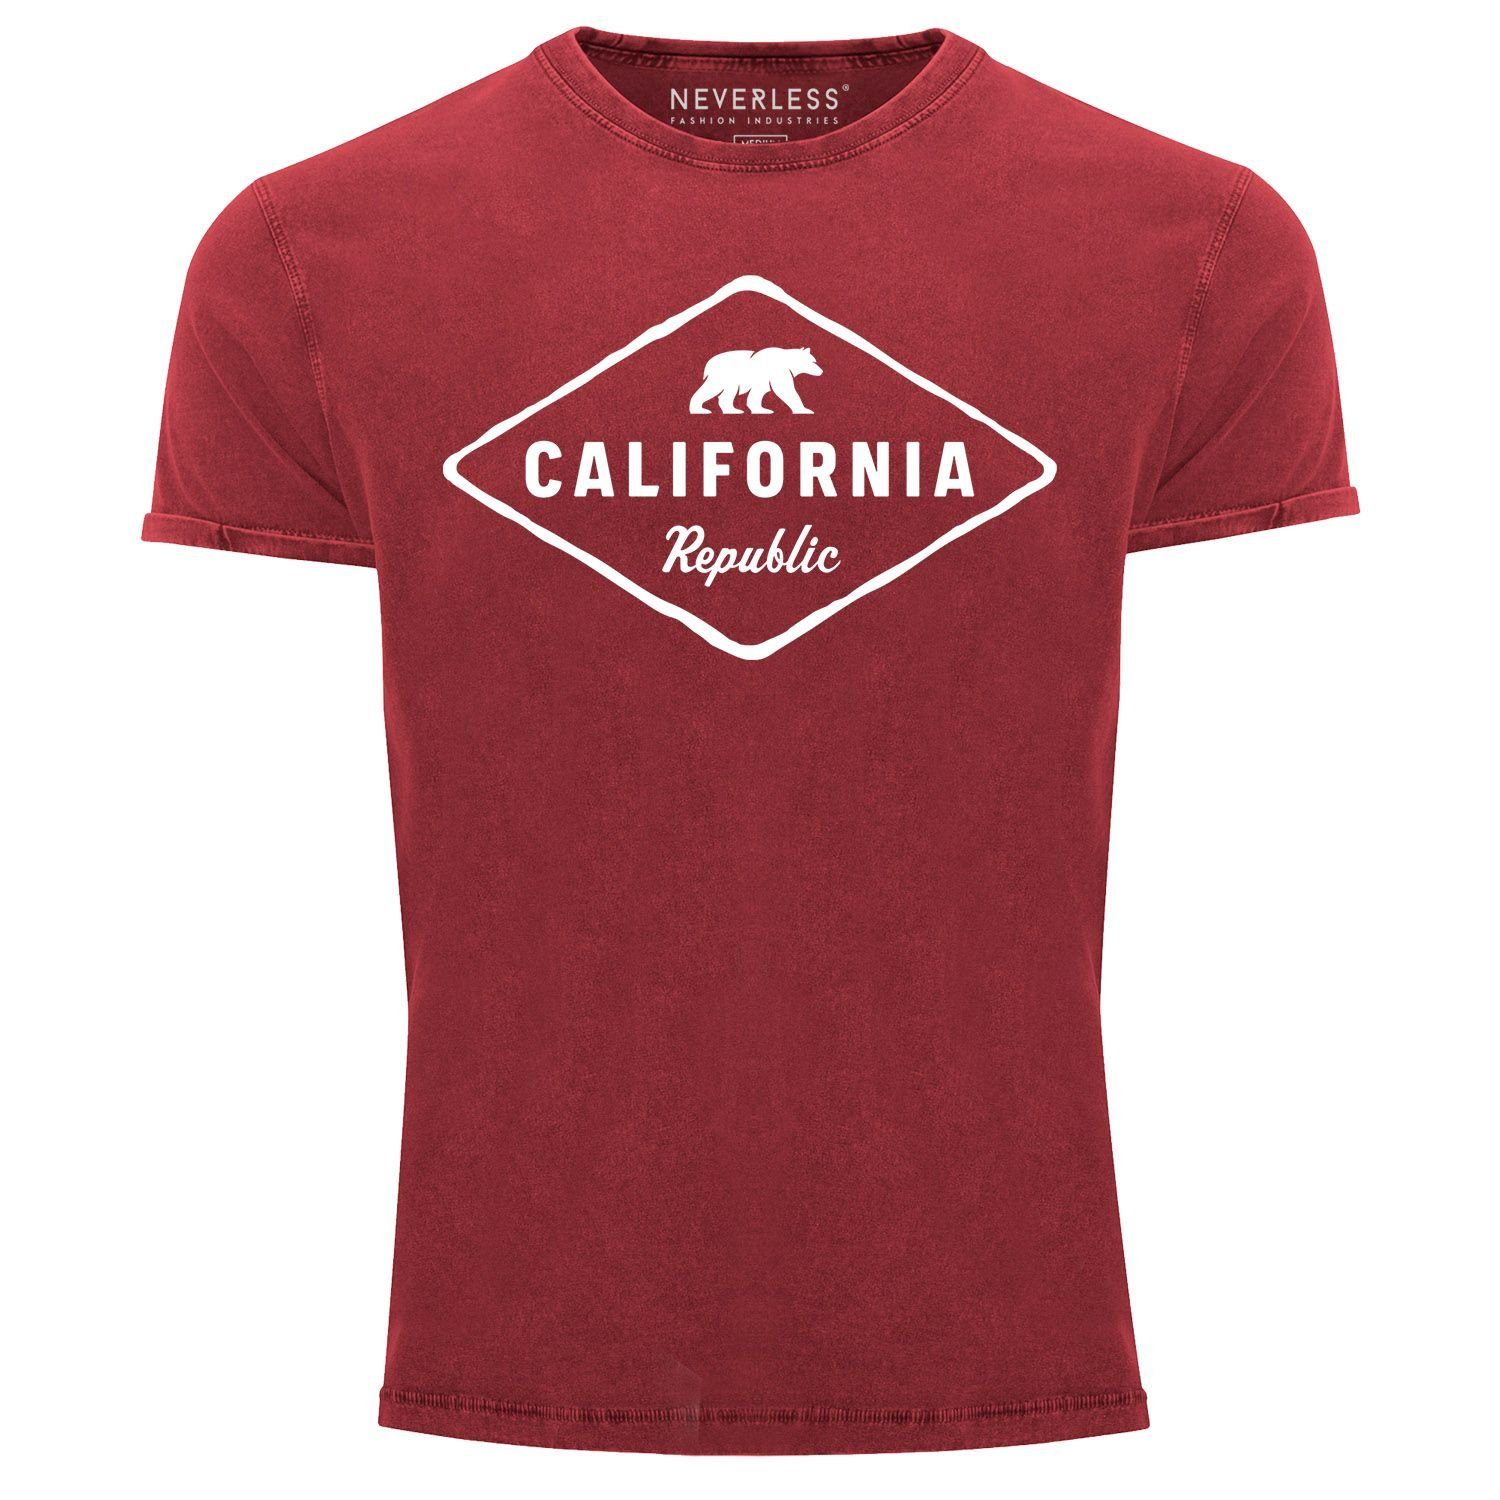 Shirt rot Aufdruck Printshirt Neverless USA Neverless® Print Badge T-Shirt Vintage California Sunshine State Bear mit Bär Republic Print-Shirt Herren